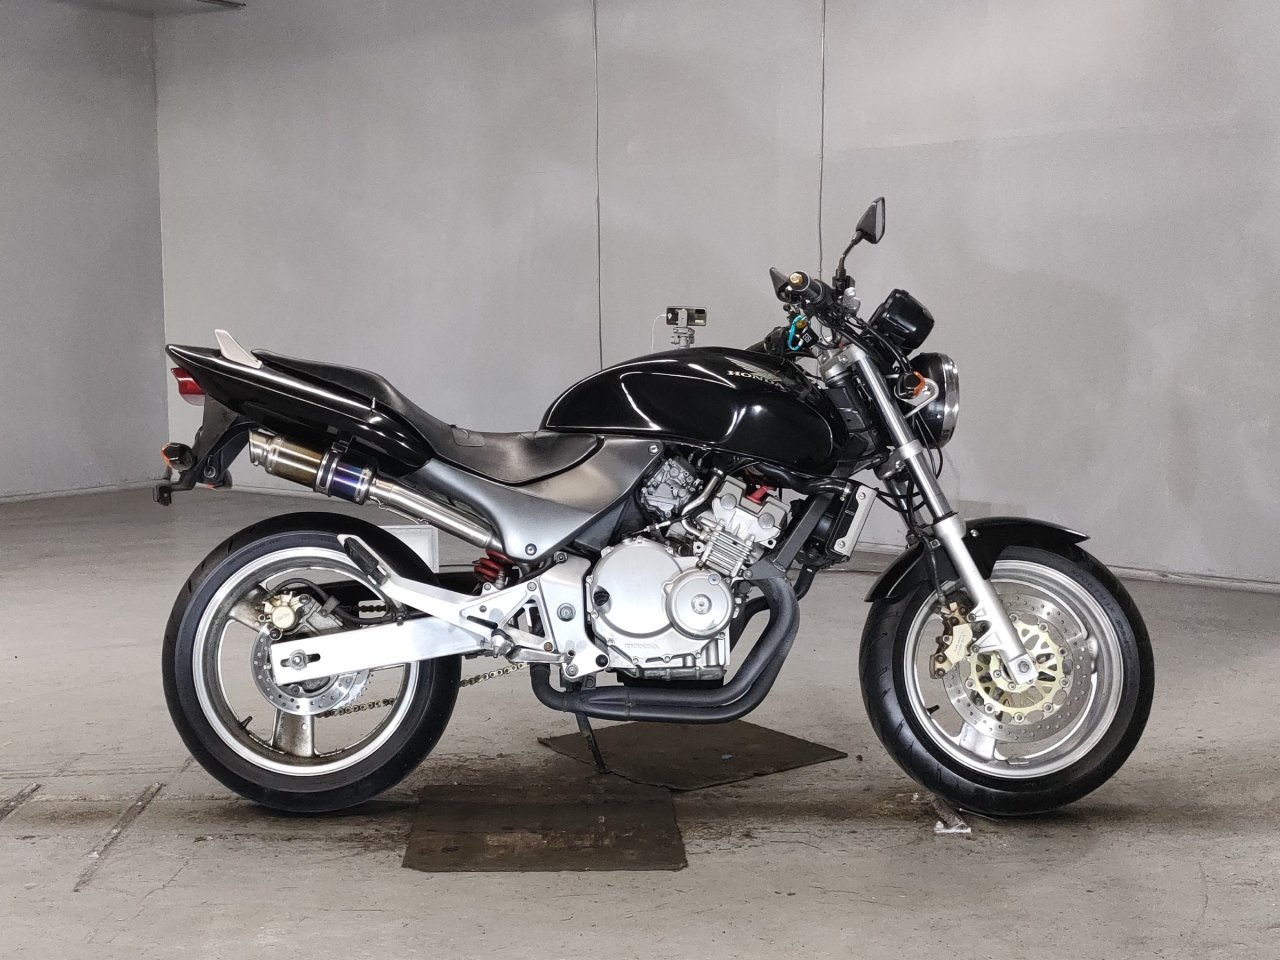 Honda Hornet 250 - Adamoto - Motorcycles from Japan